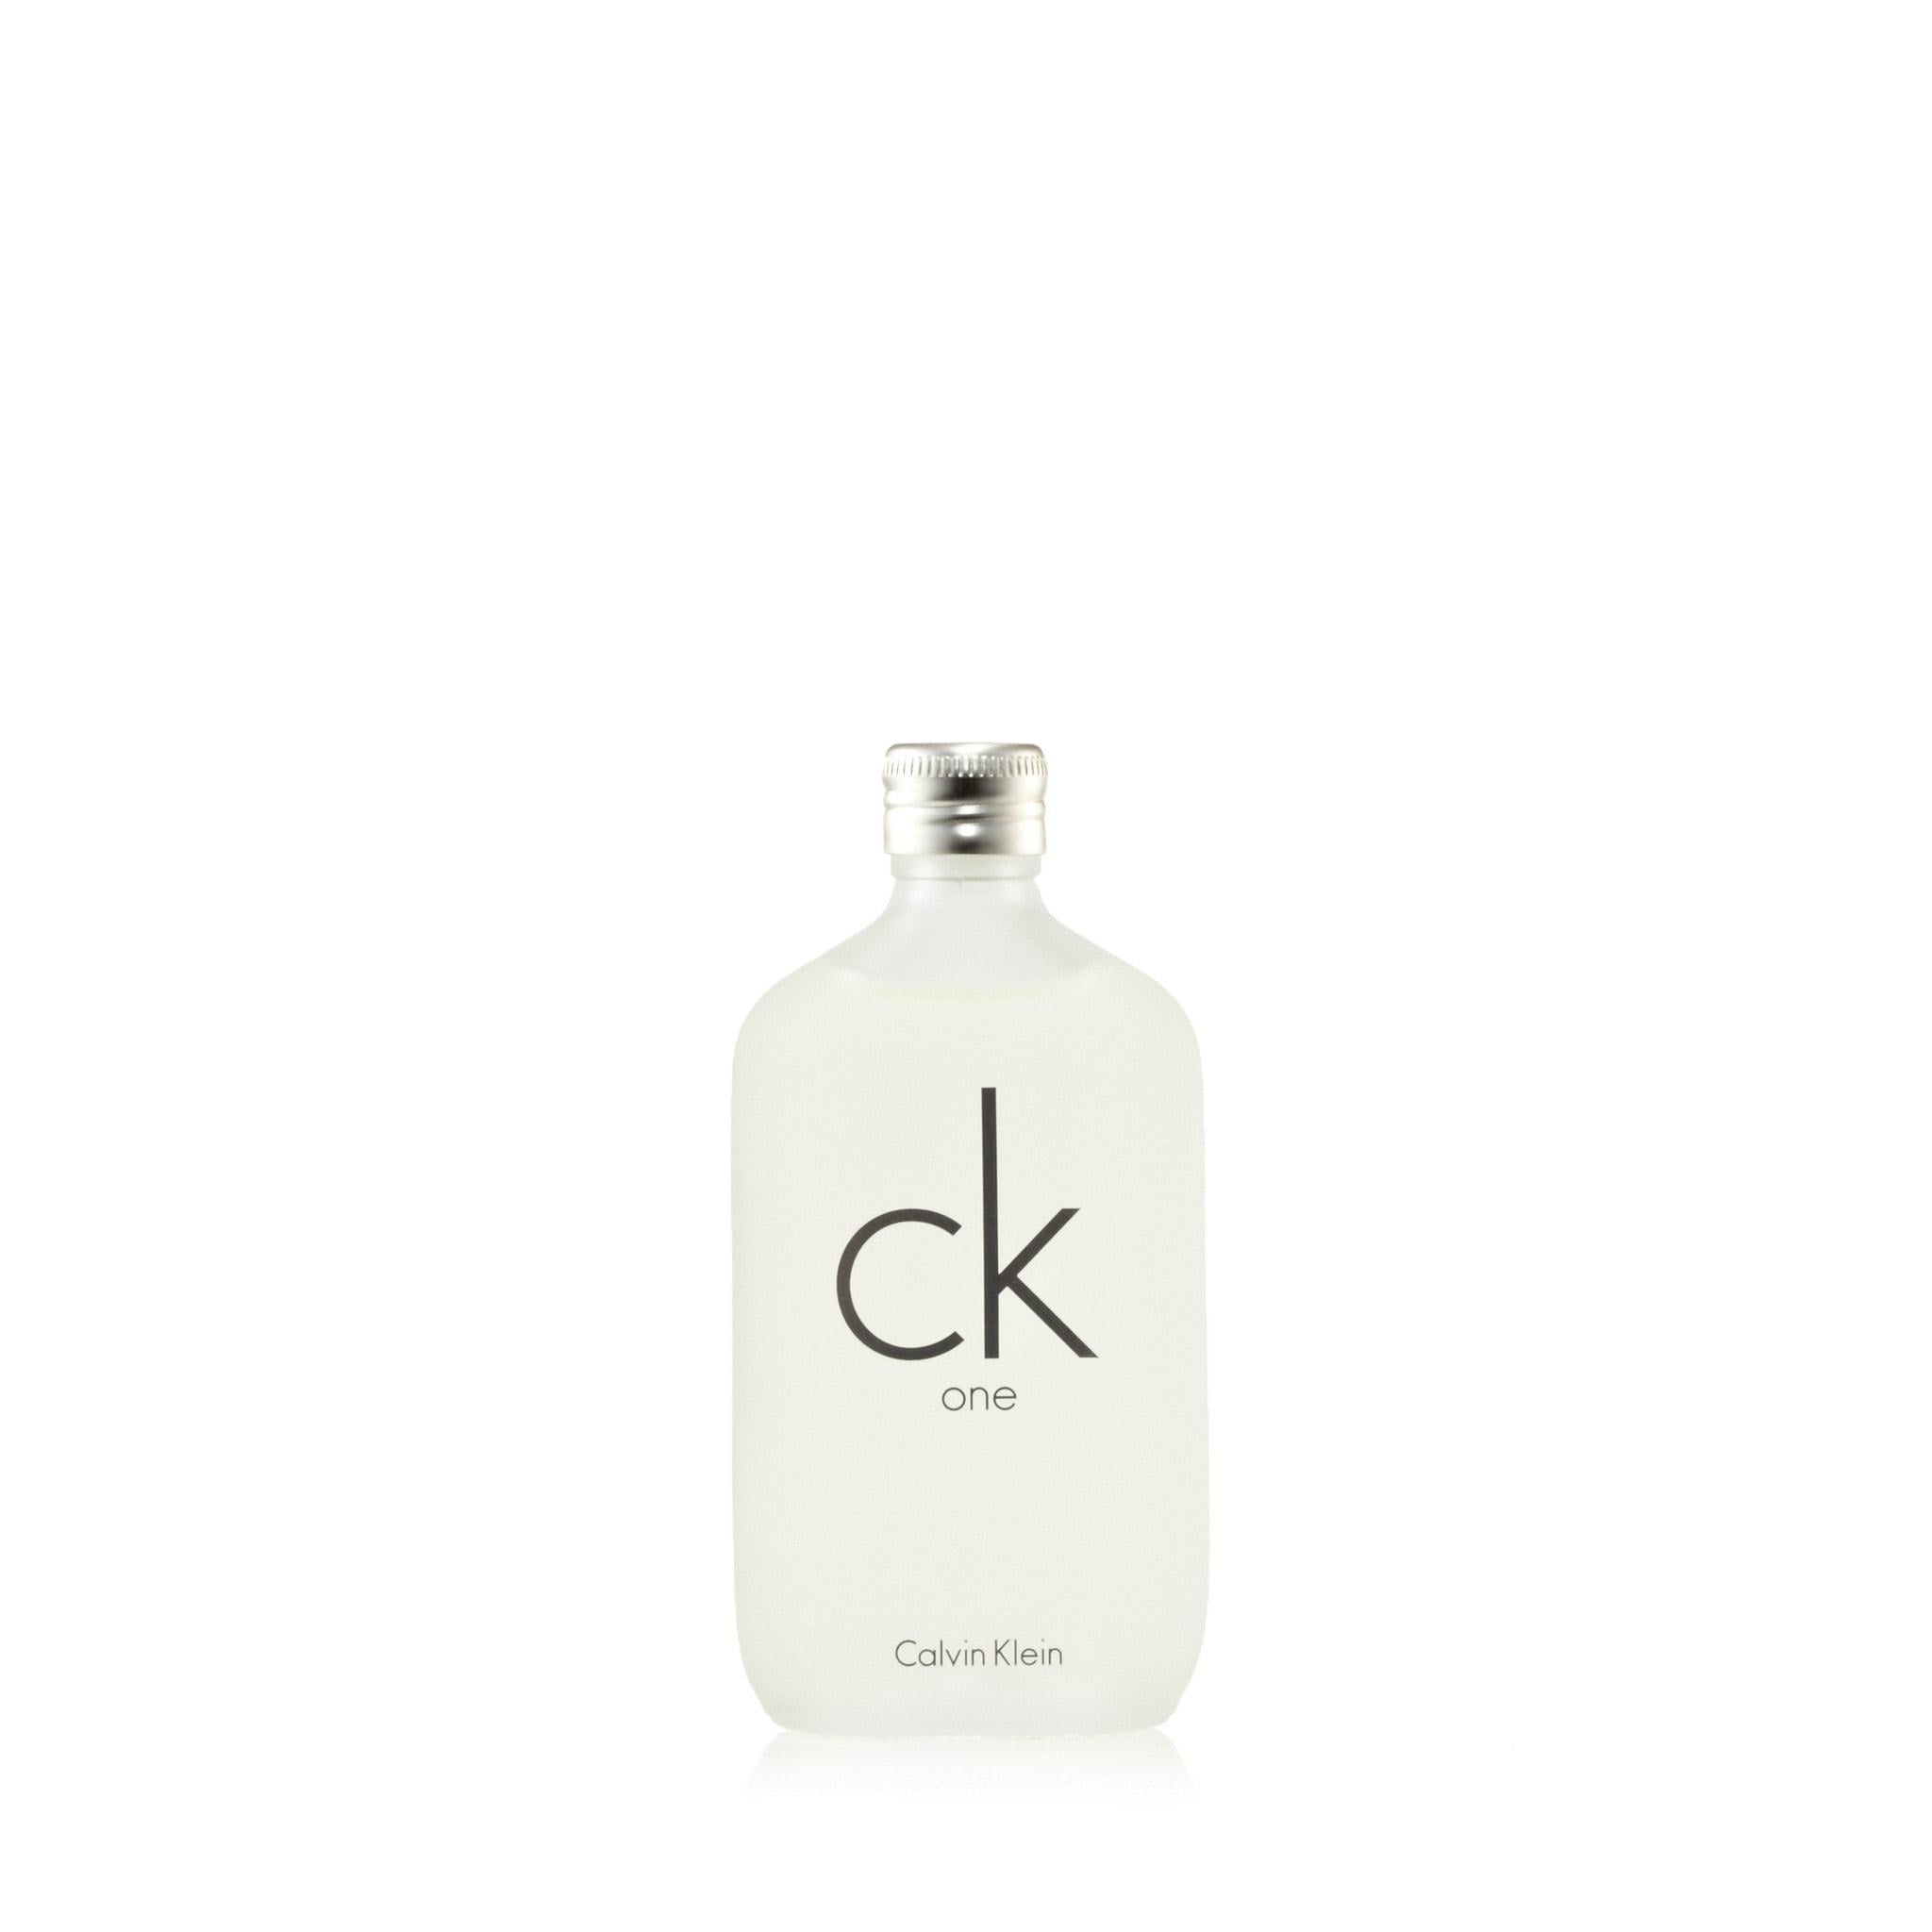 Handschrift Pacifische eilanden Soepel CK One For Women And Men By Calvin Klein Eau De Toilette Spray – Perfumania